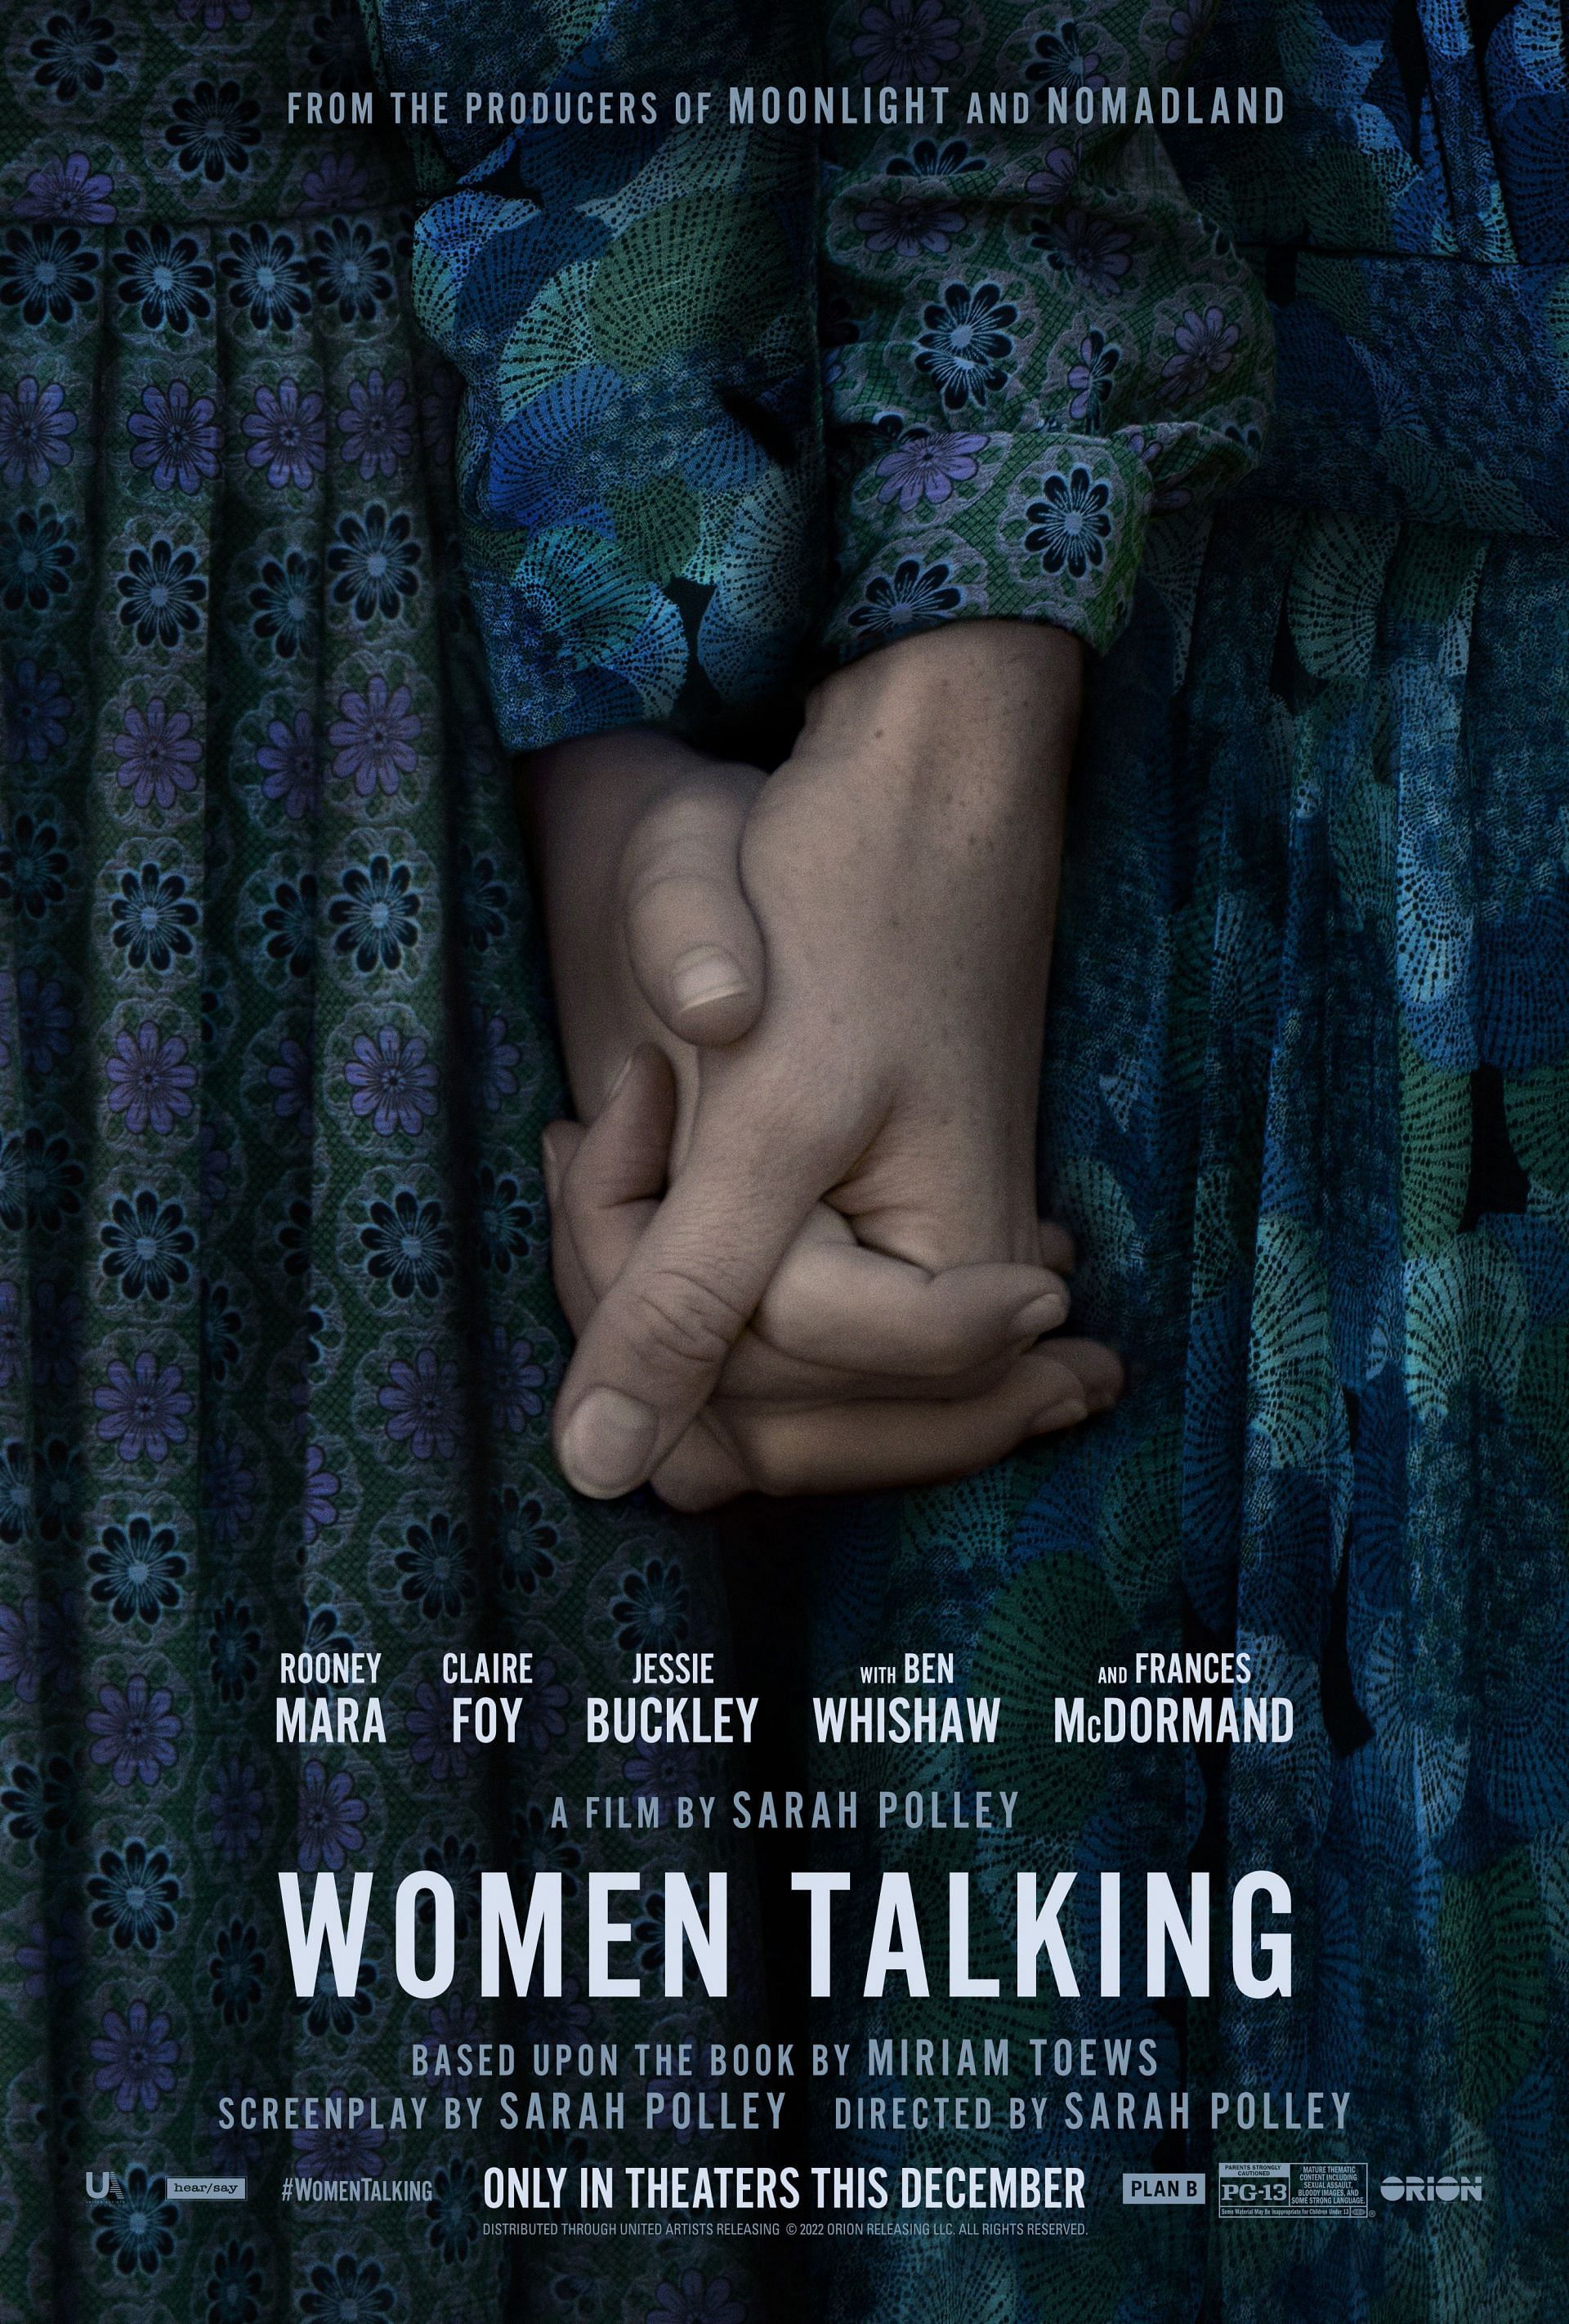 Women Talking (Image via United Artists Releasing)